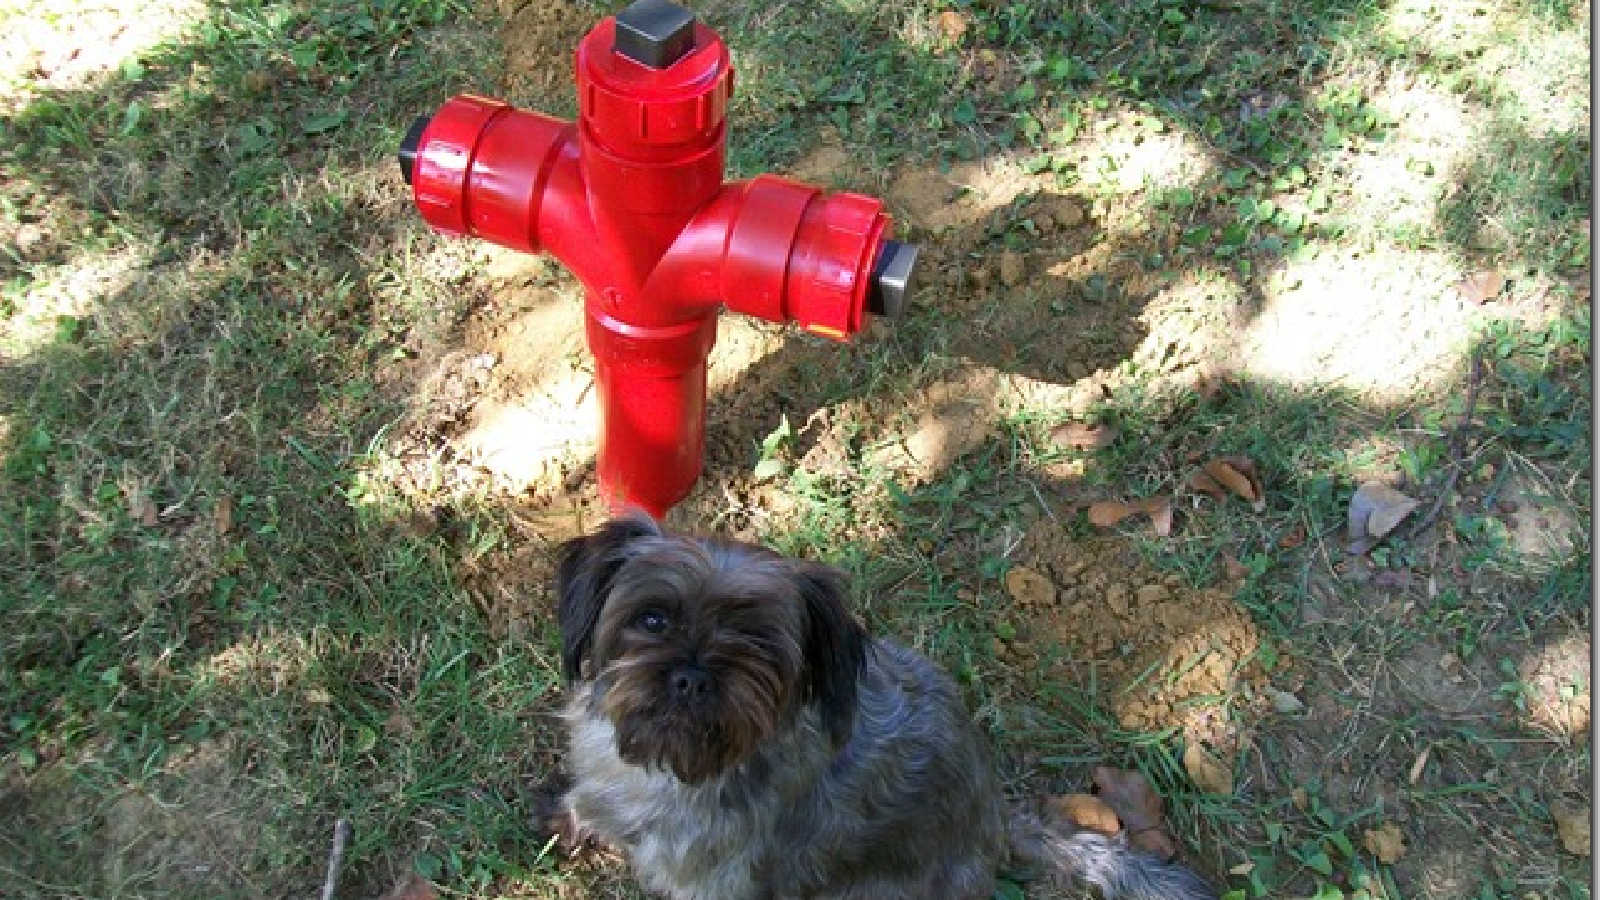 fire hydrant lawn ornament